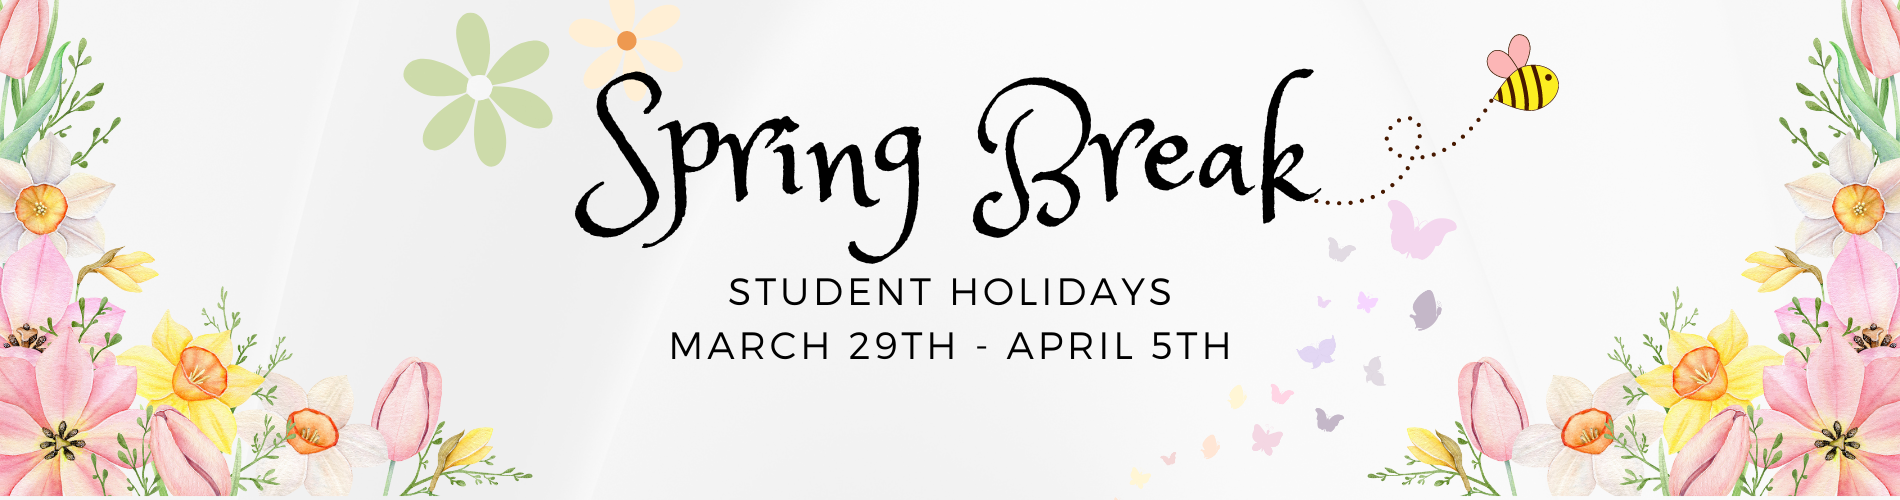 Student Holidays-Spring Break